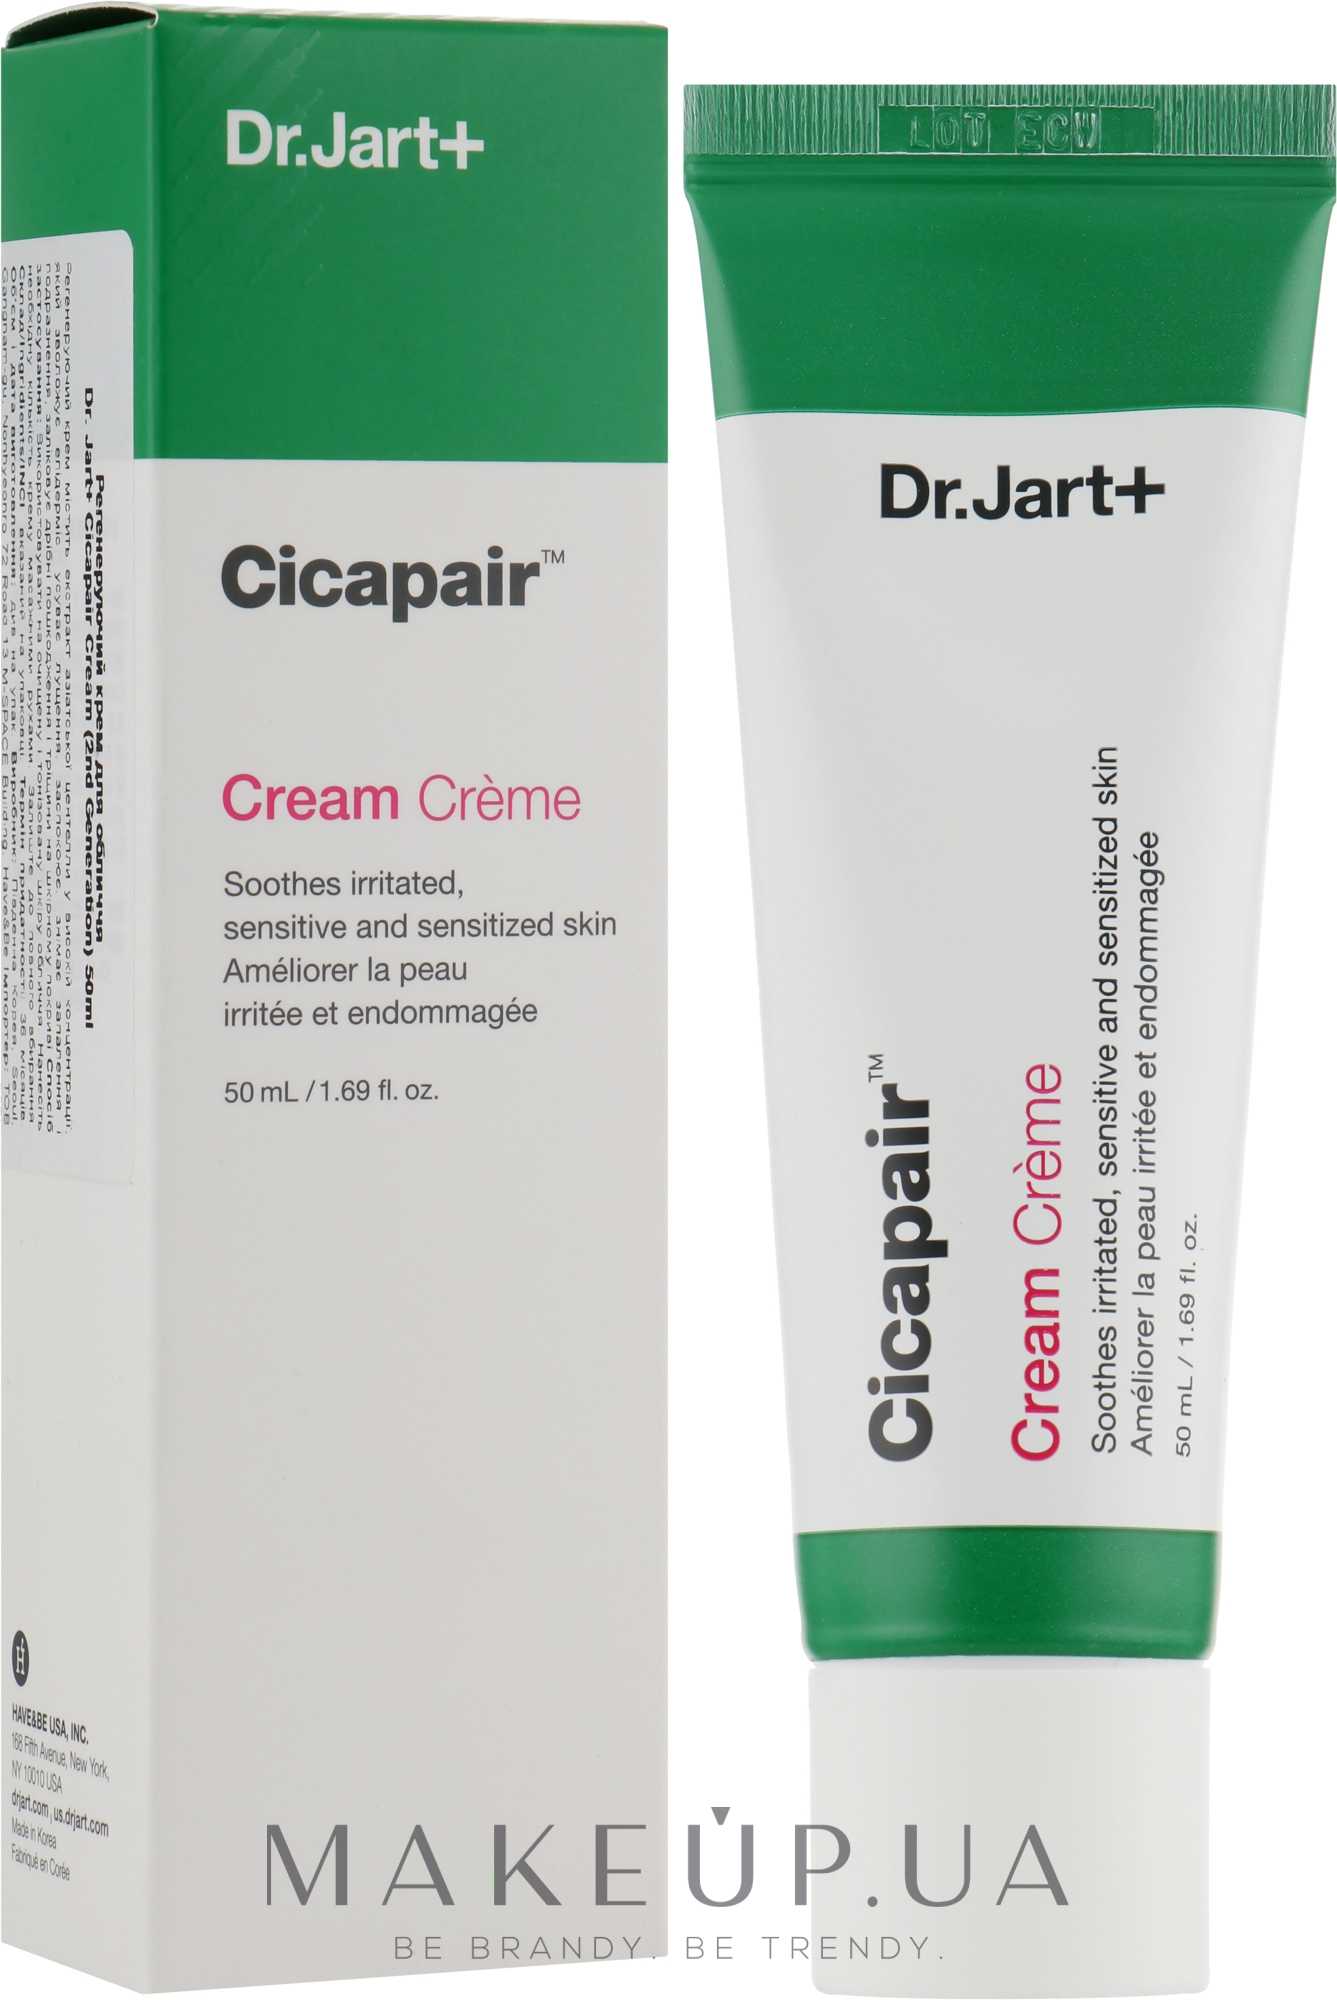 Dr jart cicapair cream